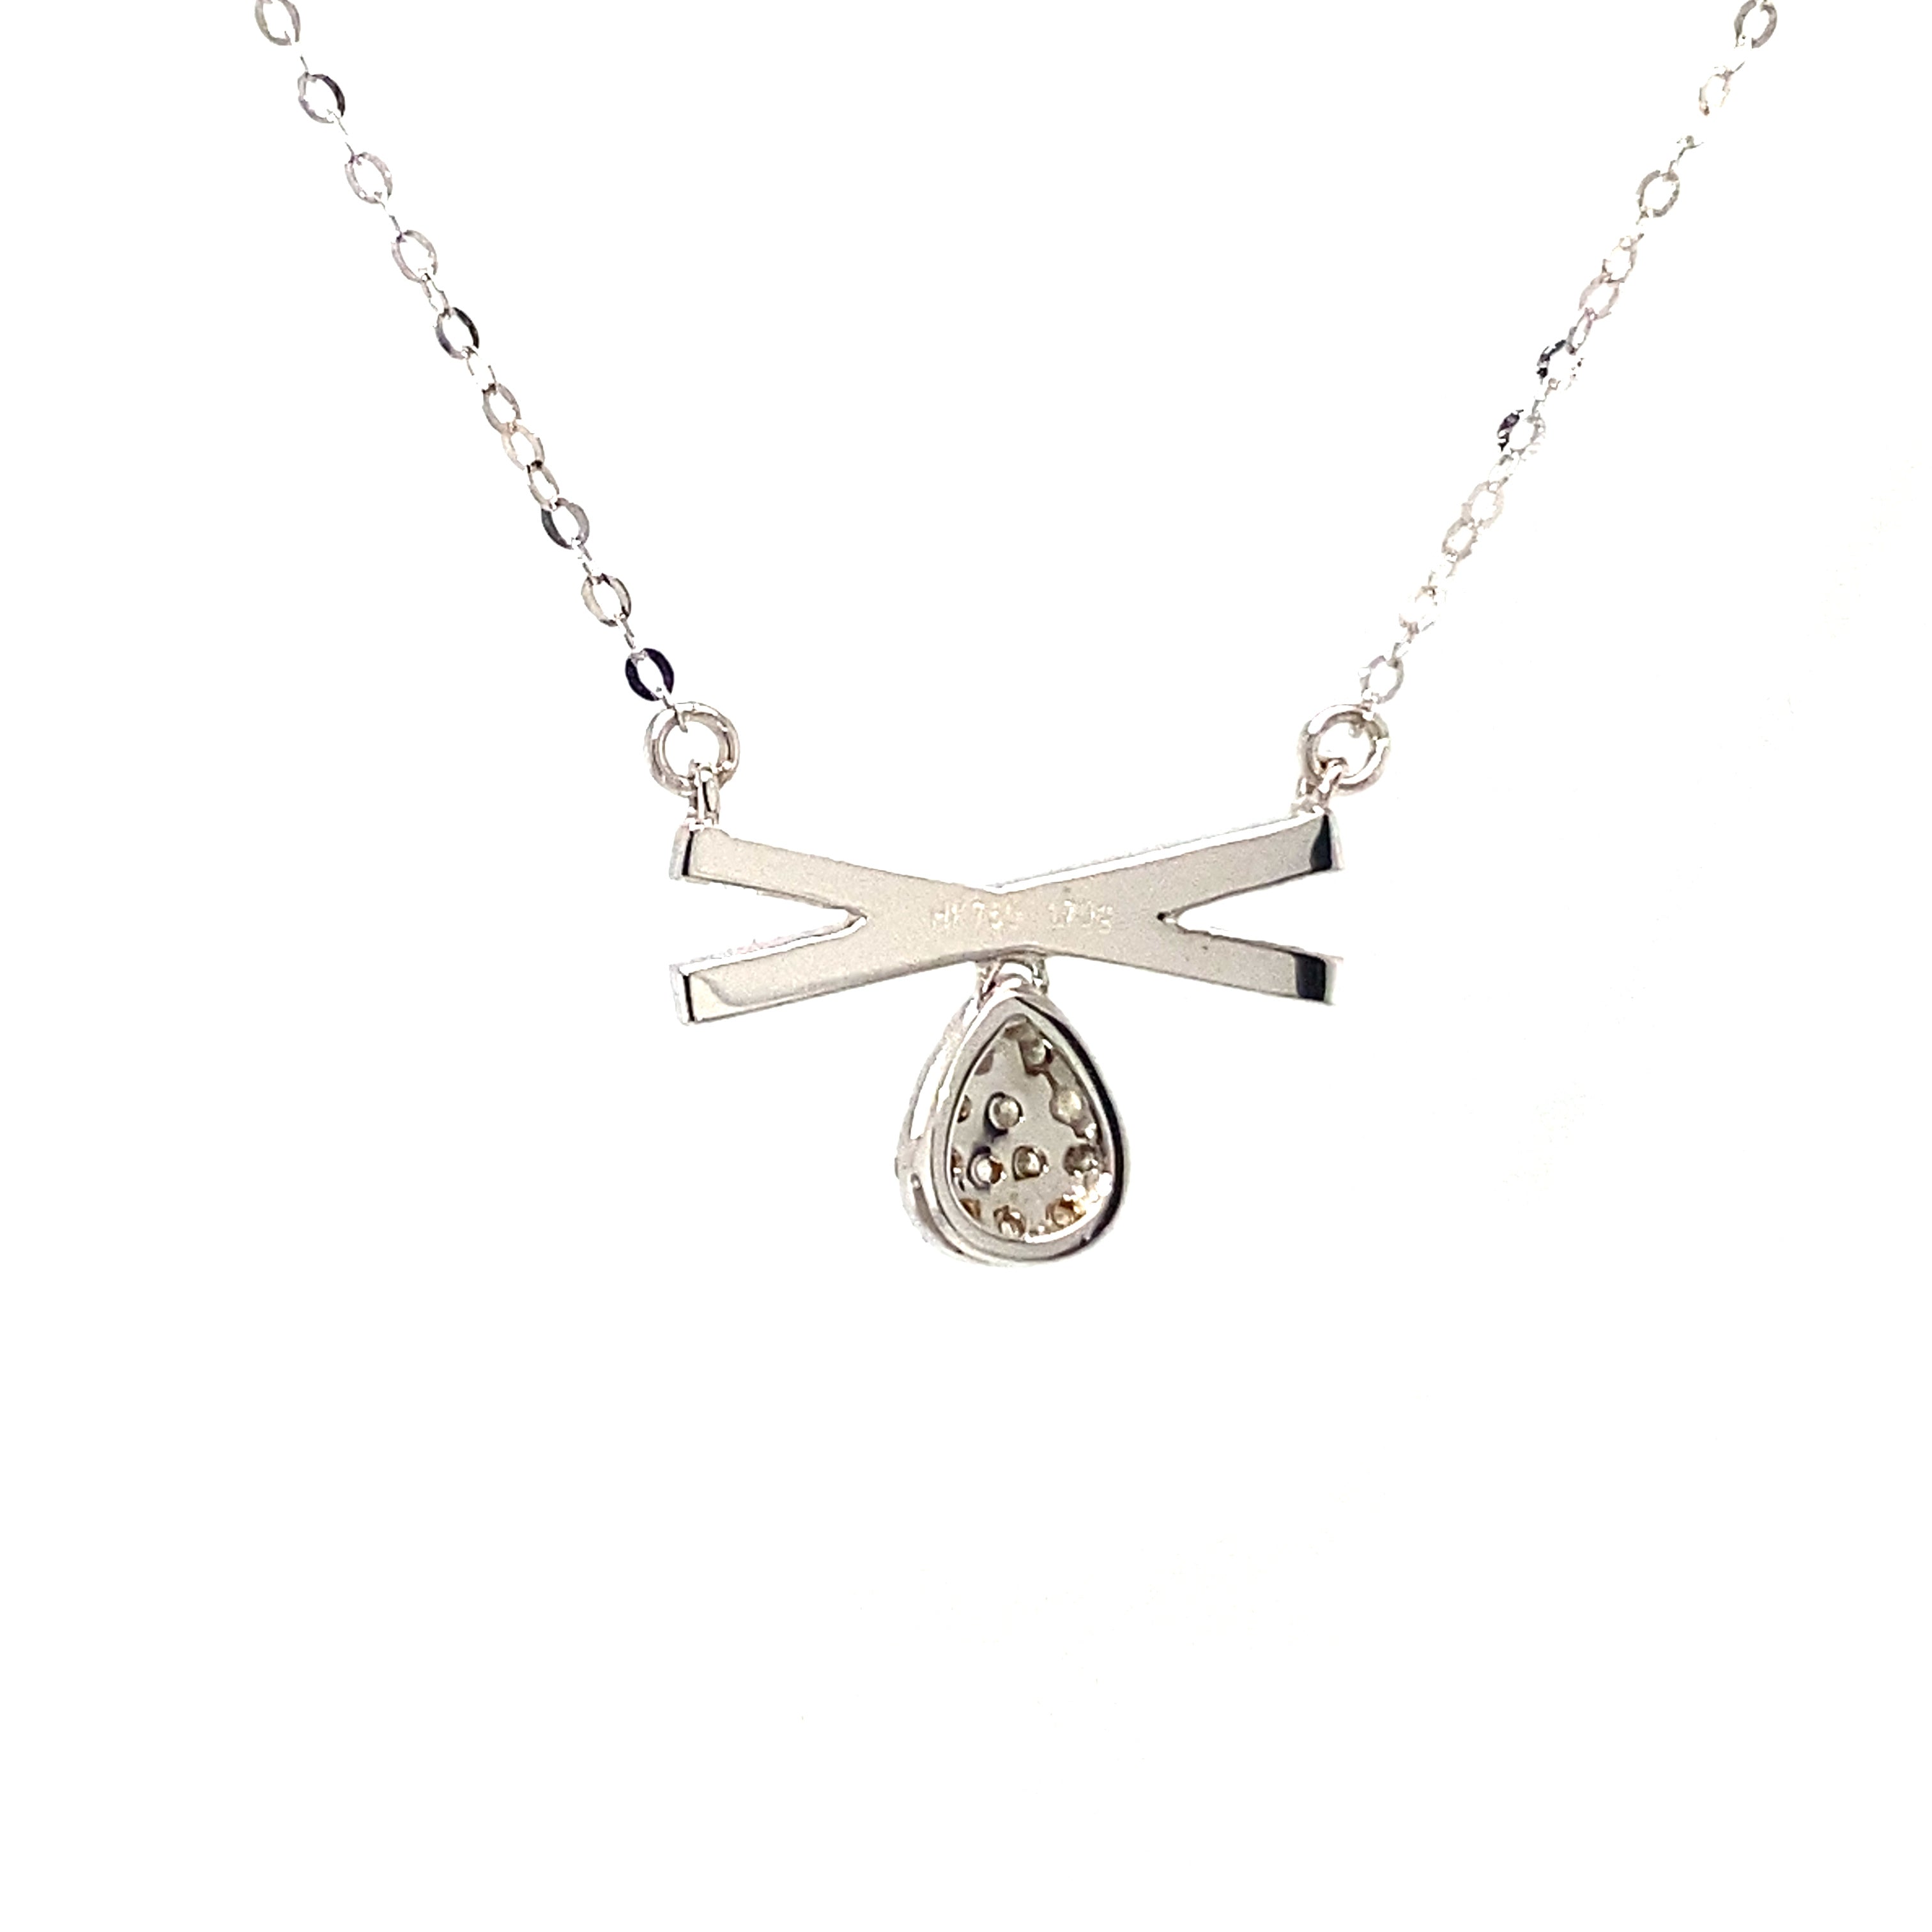 18K White Gold Cross Sign Drop Diamond Necklace